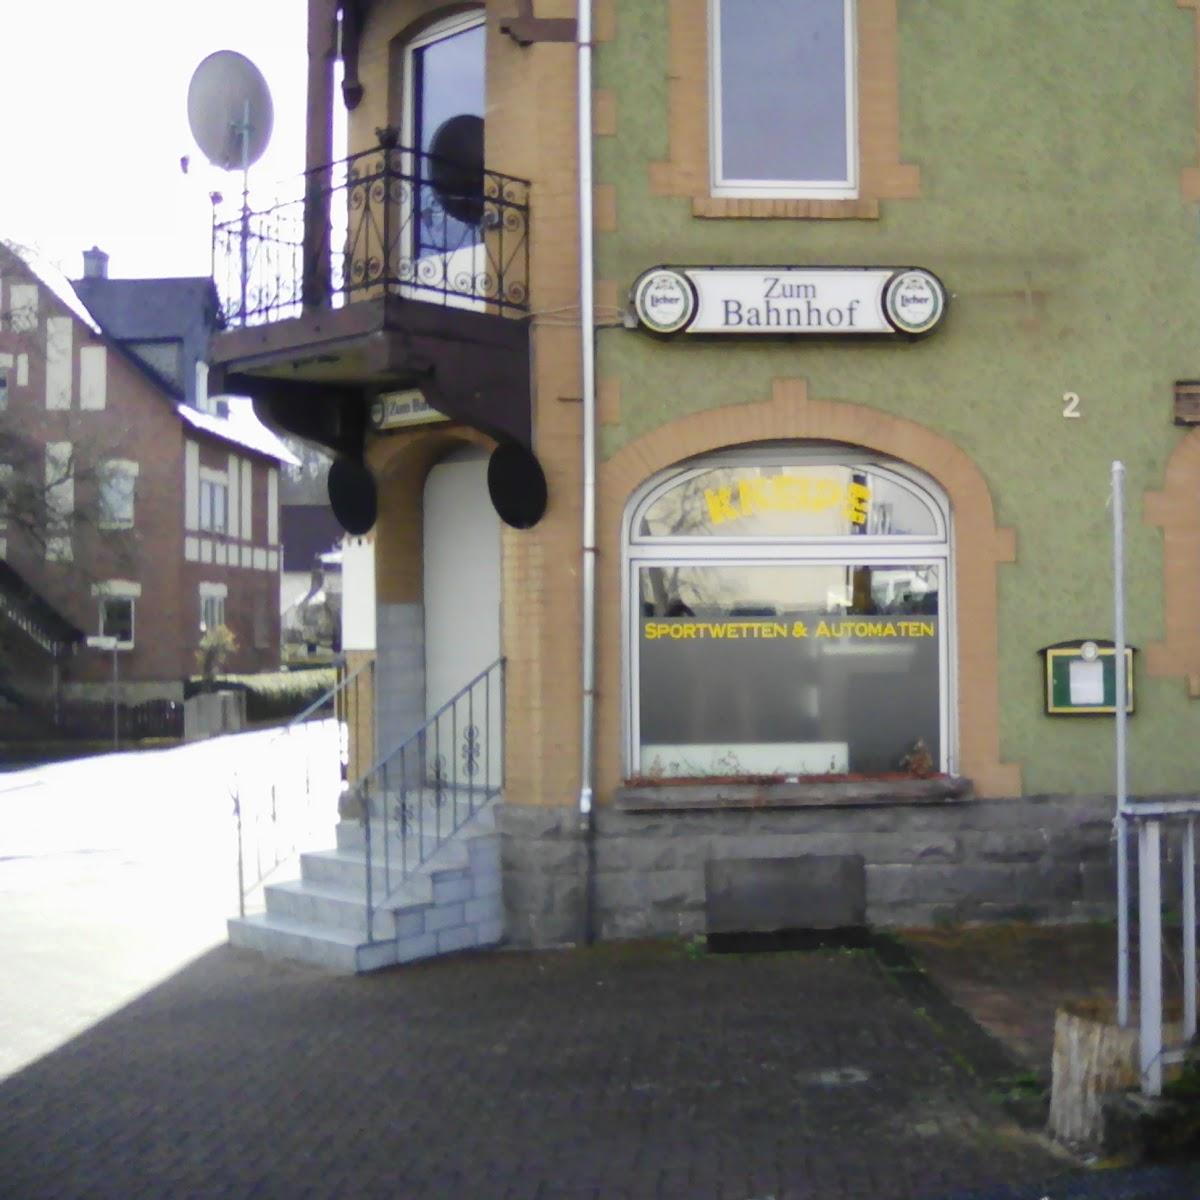 Restaurant "Zum Bahnhof" in Aßlar